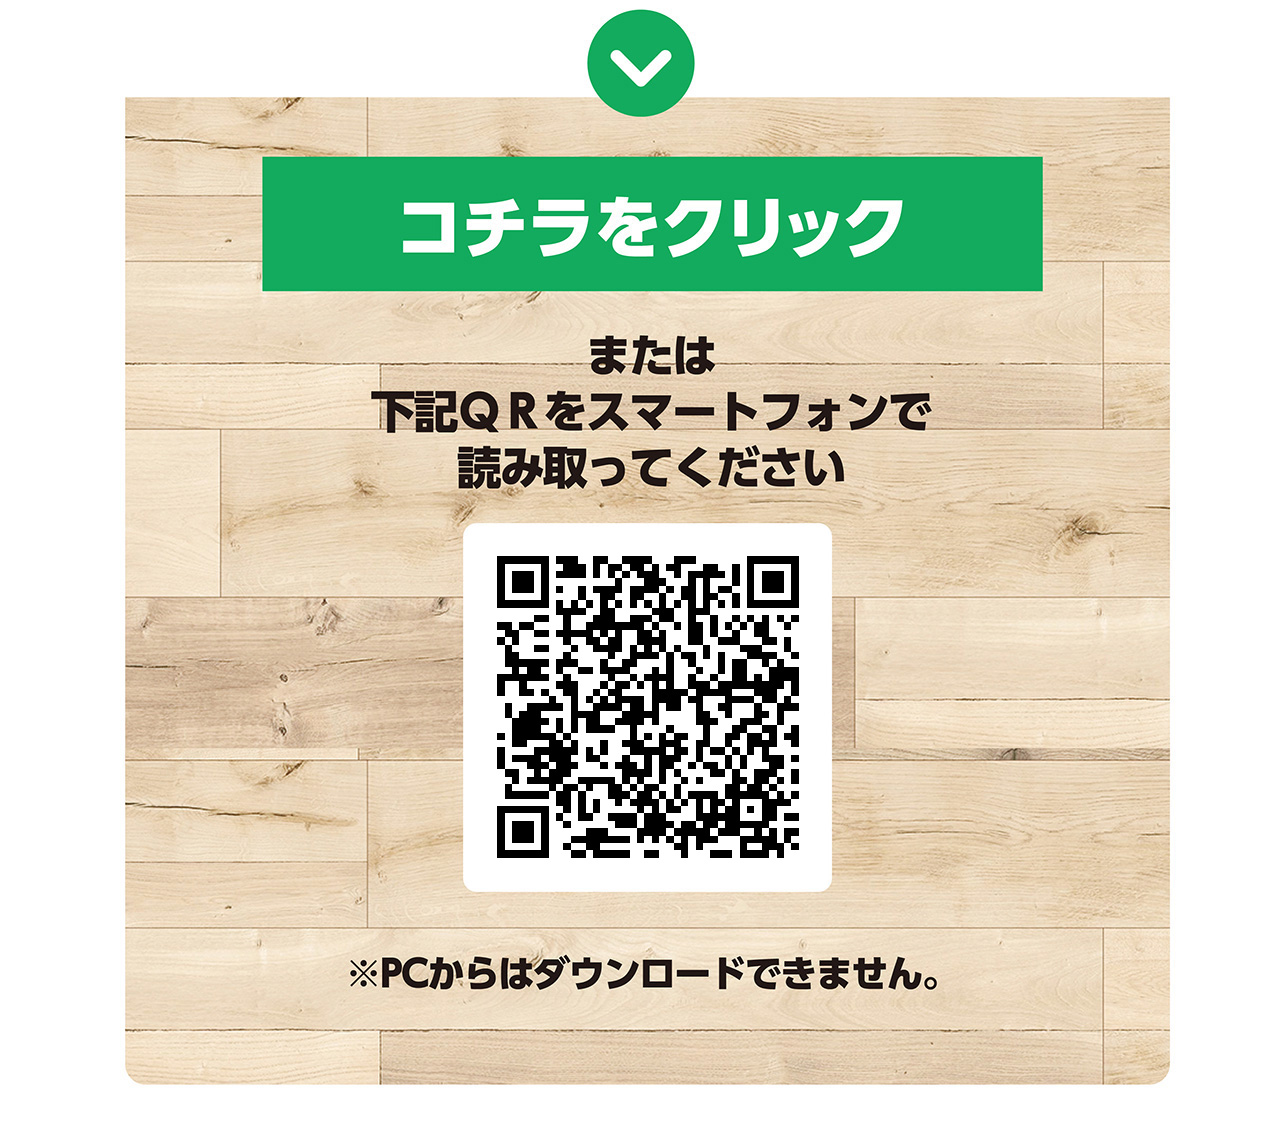 Line Pay ジョイフル本田で使える5 Offクーポン配信中 株式会社ジョイフル本田